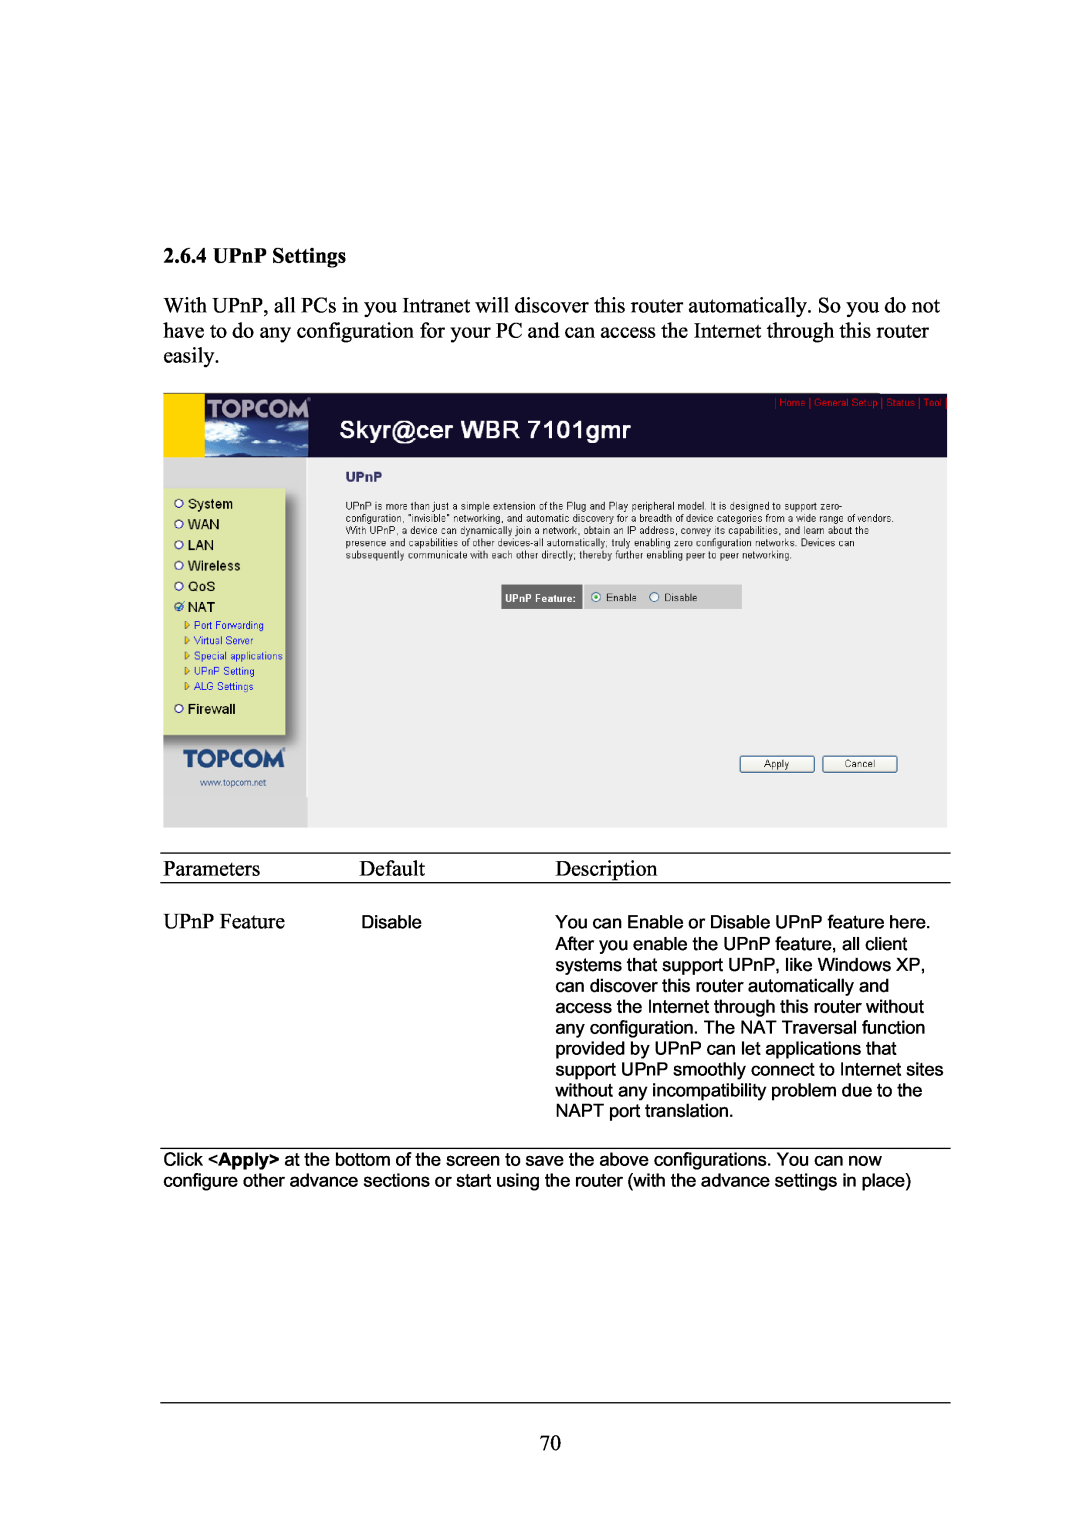 Topcom WBR 7101GMR manual UPnP Settings, Parameters, Default, Description, UPnP Feature 